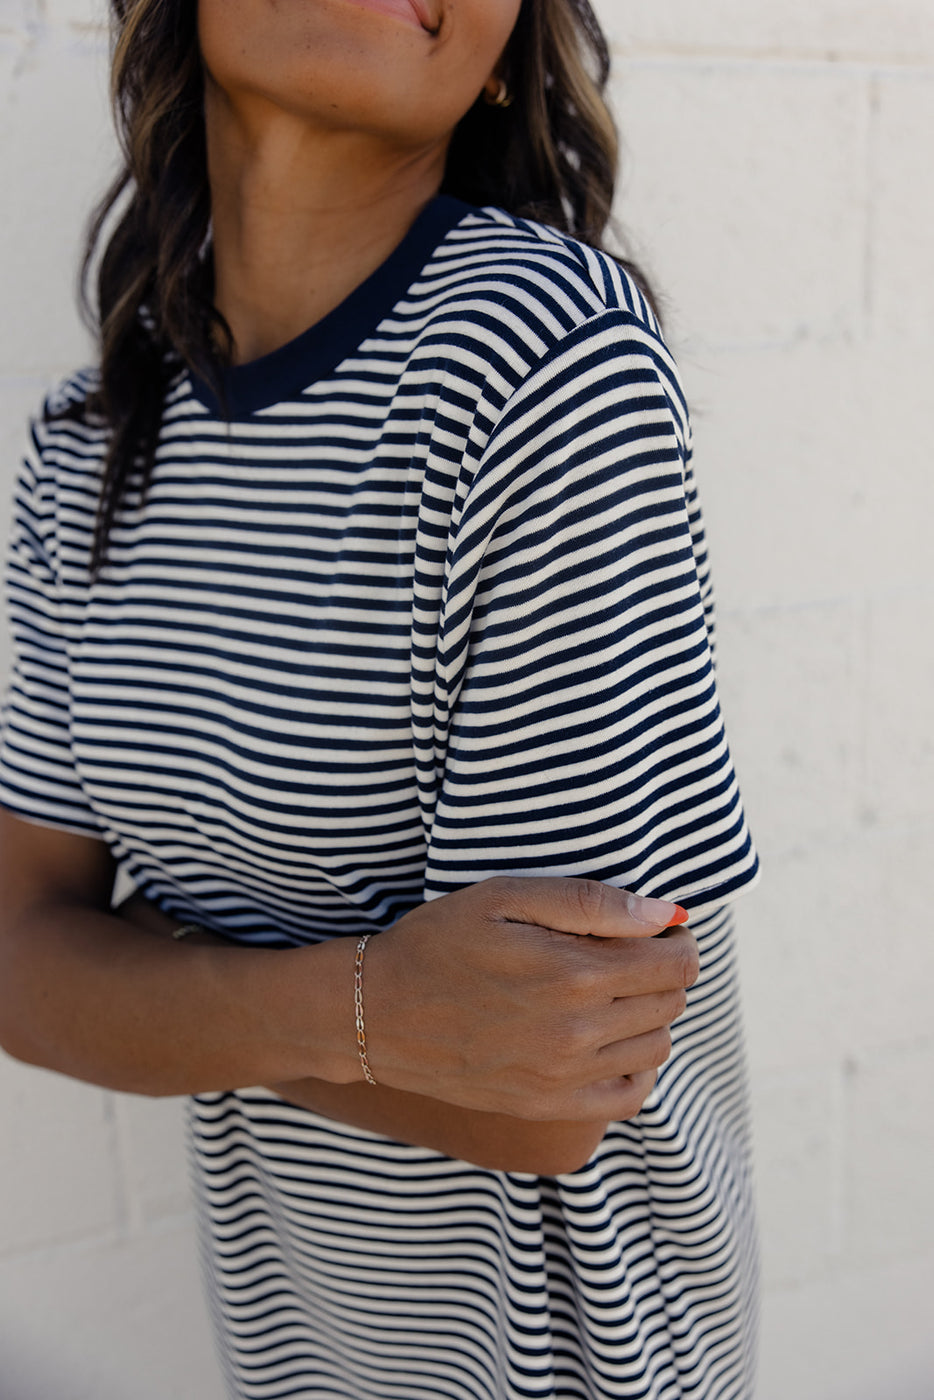 a woman wearing a striped shirt